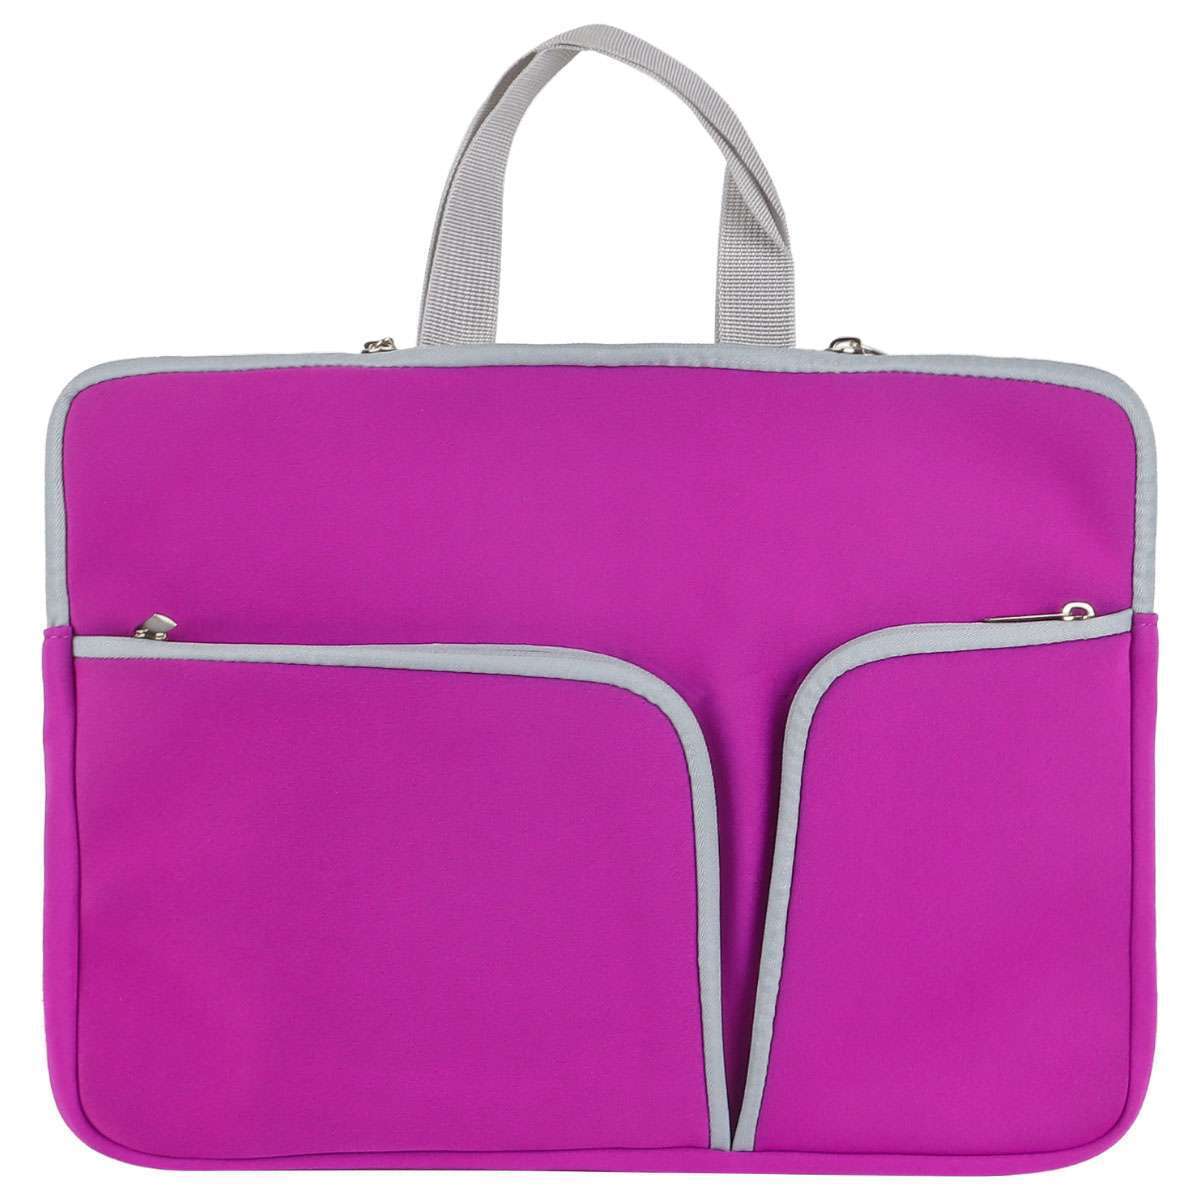 Laptop Sleeve Case Bag Cover Carry Handbag For iPad MacBook Notebook 11